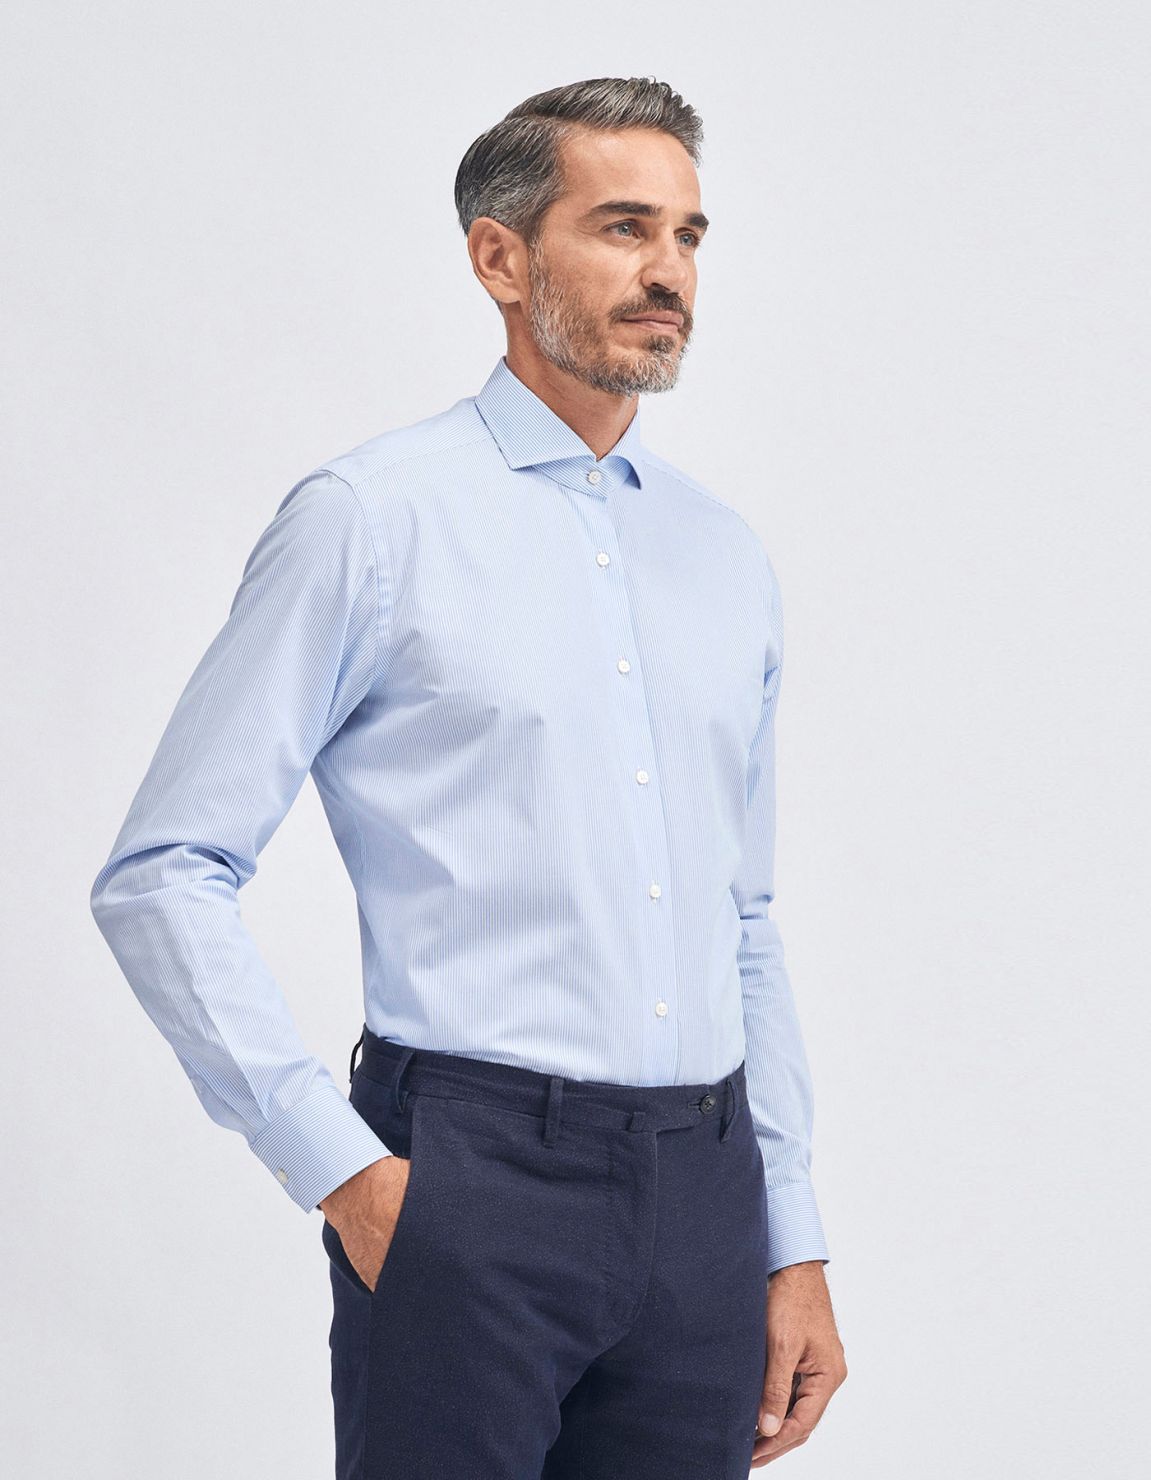 Shirt Collar cutaway Light Blue Poplin Tailor Custom Fit 1